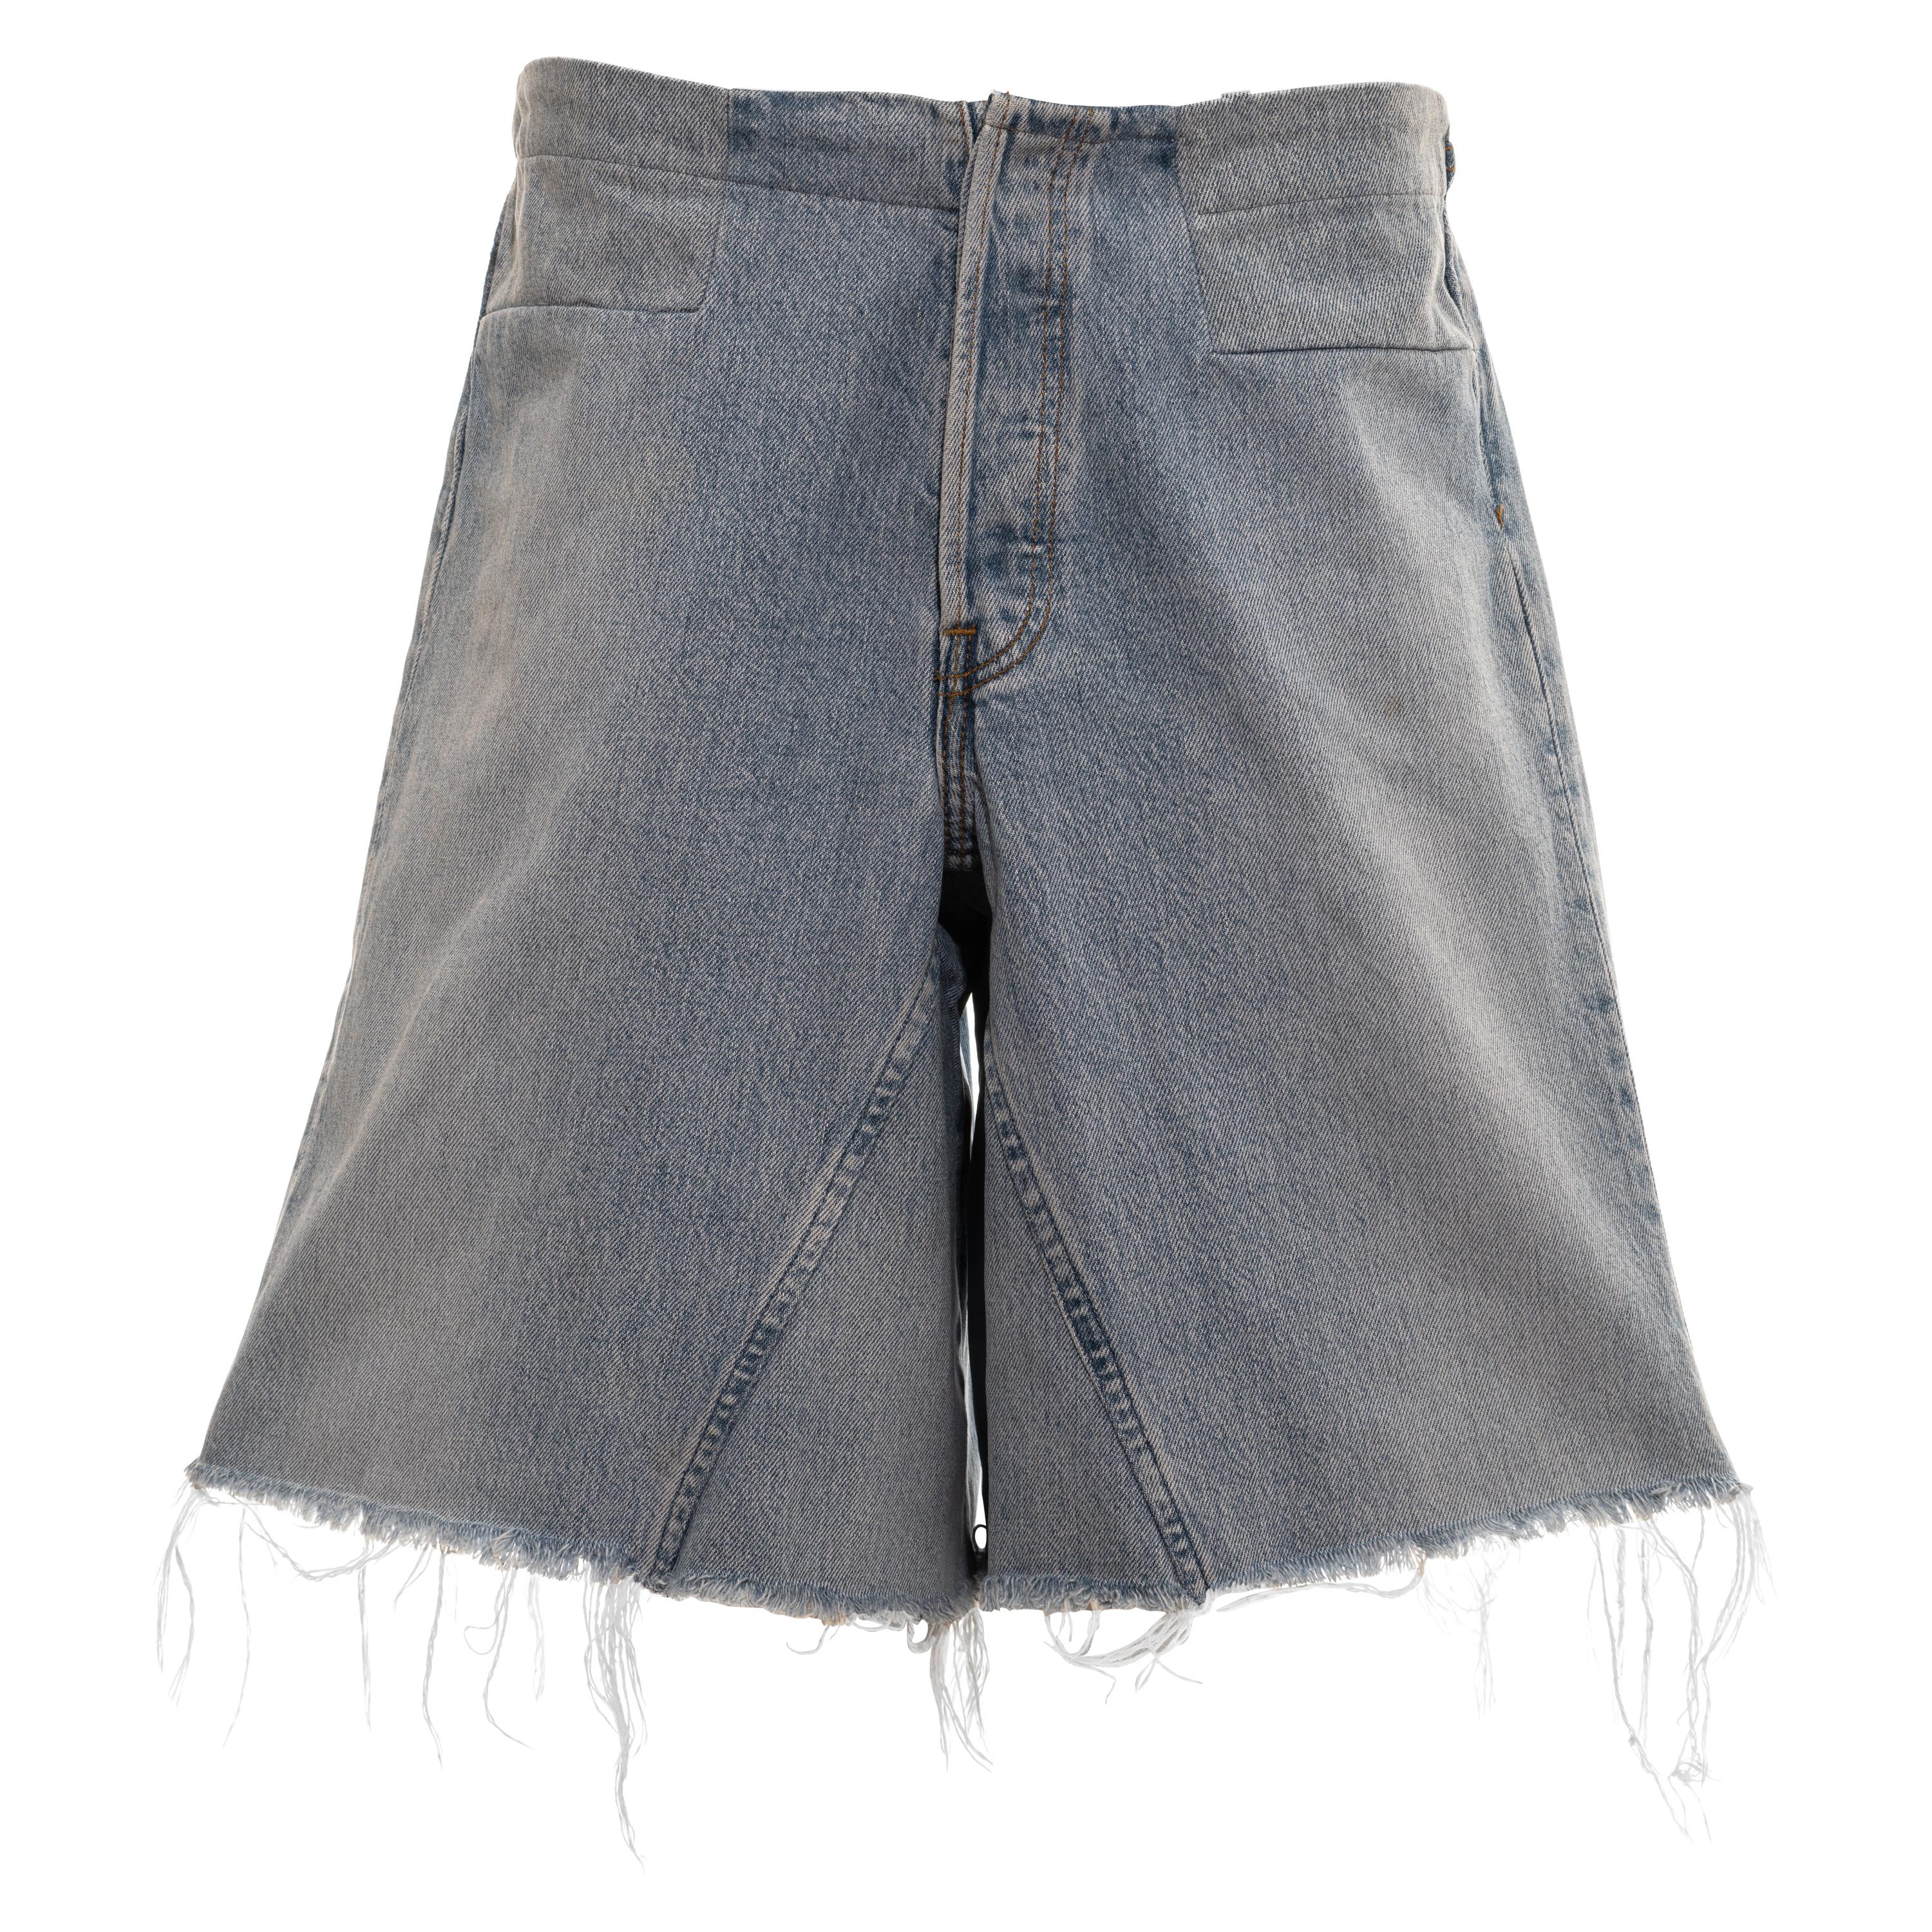 Martin Margiela blue denim artisanal wide cut-off shorts, fw 2001